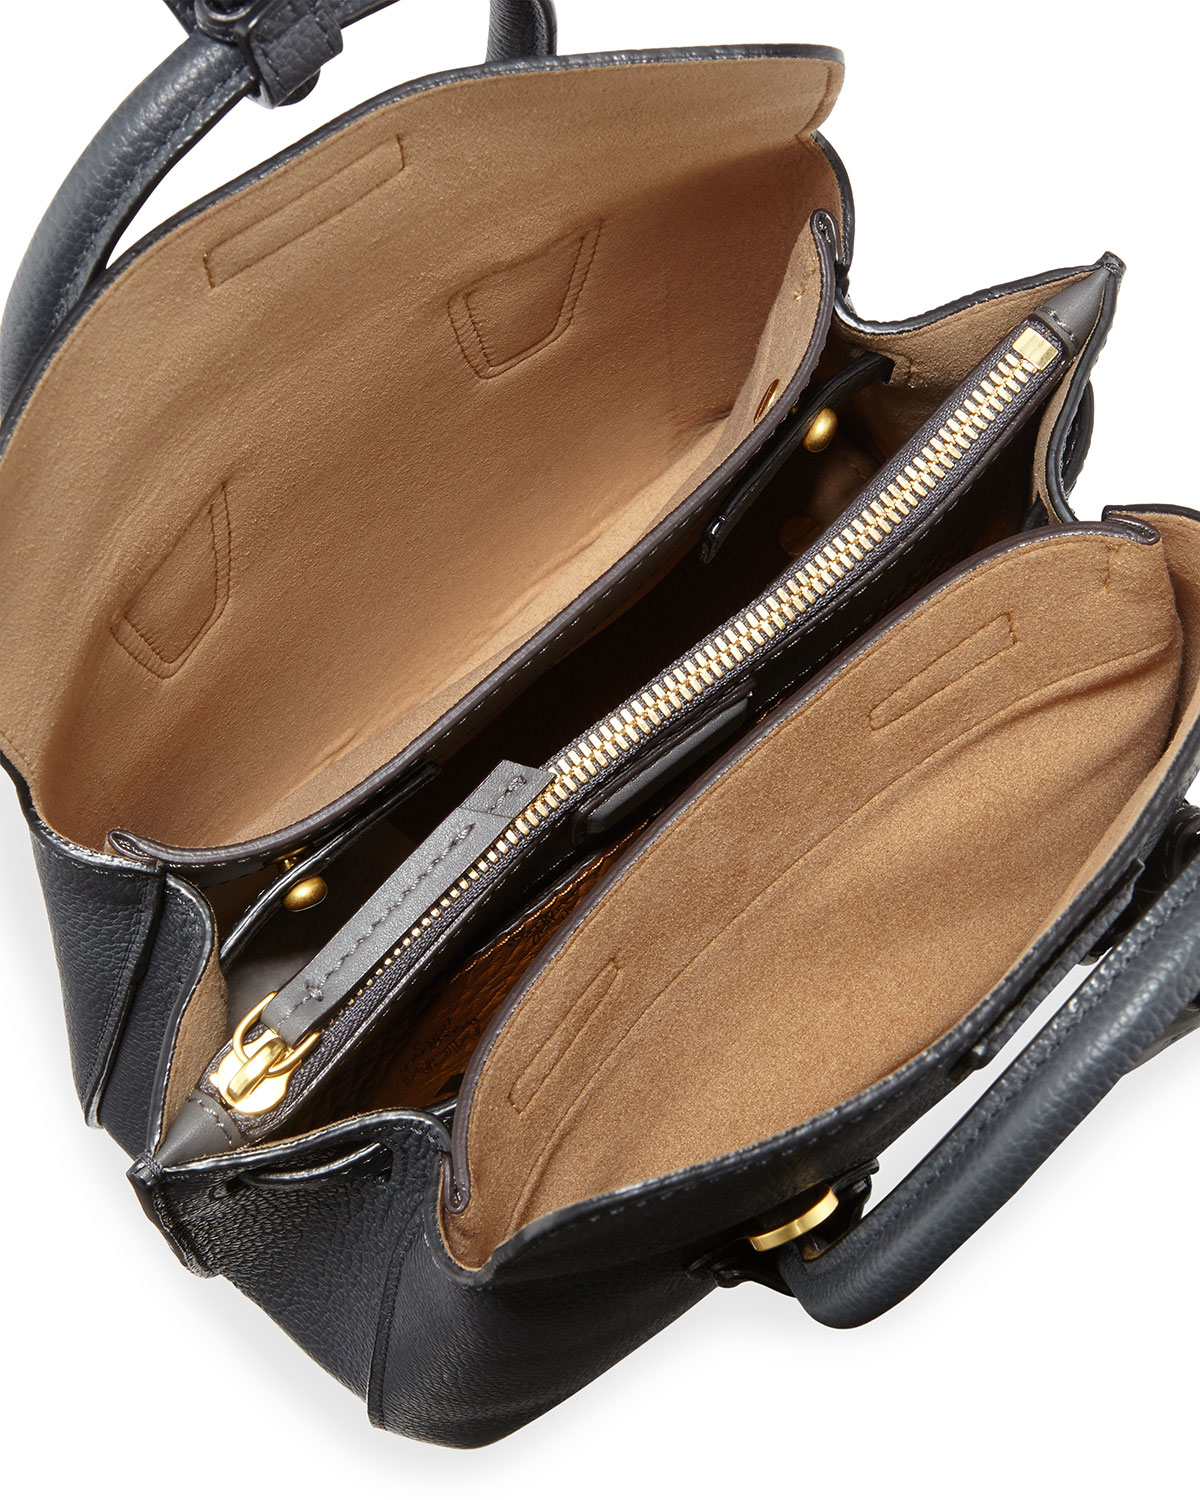 MCM Milla Mini Leather Tote Bag in Gray - Lyst